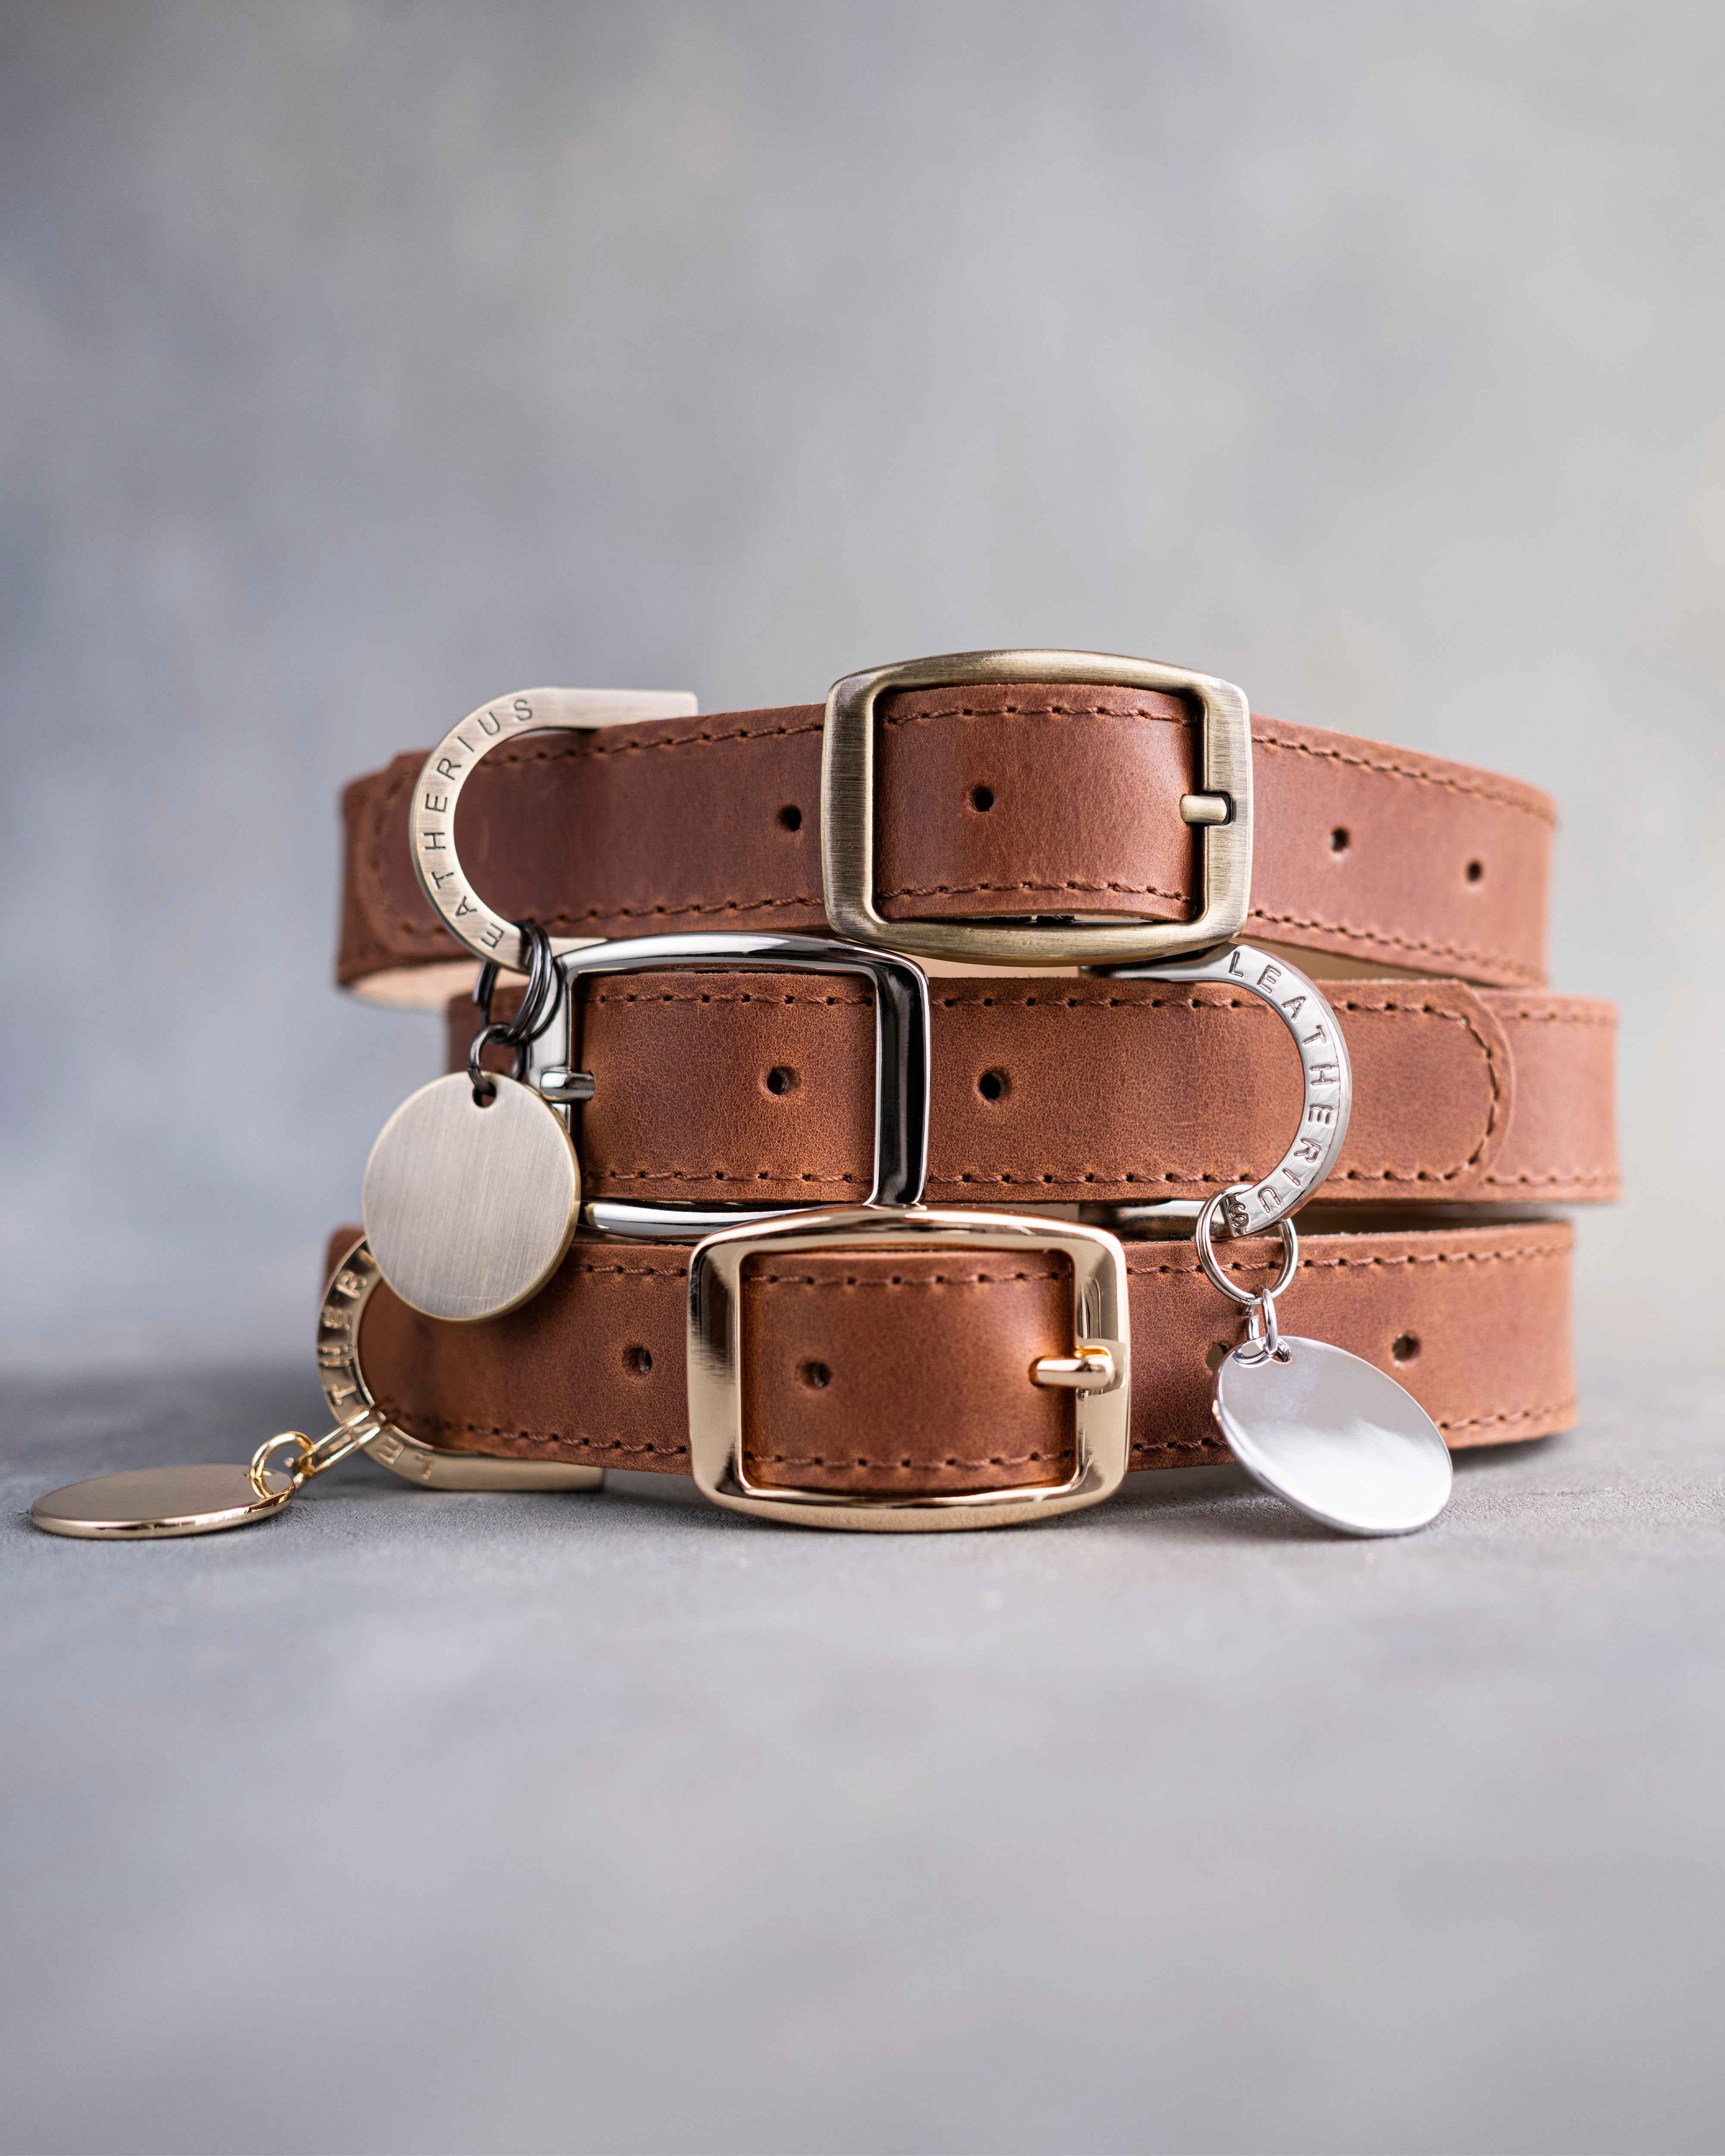 Dog Collar in Arizona leather with classy pin buckle